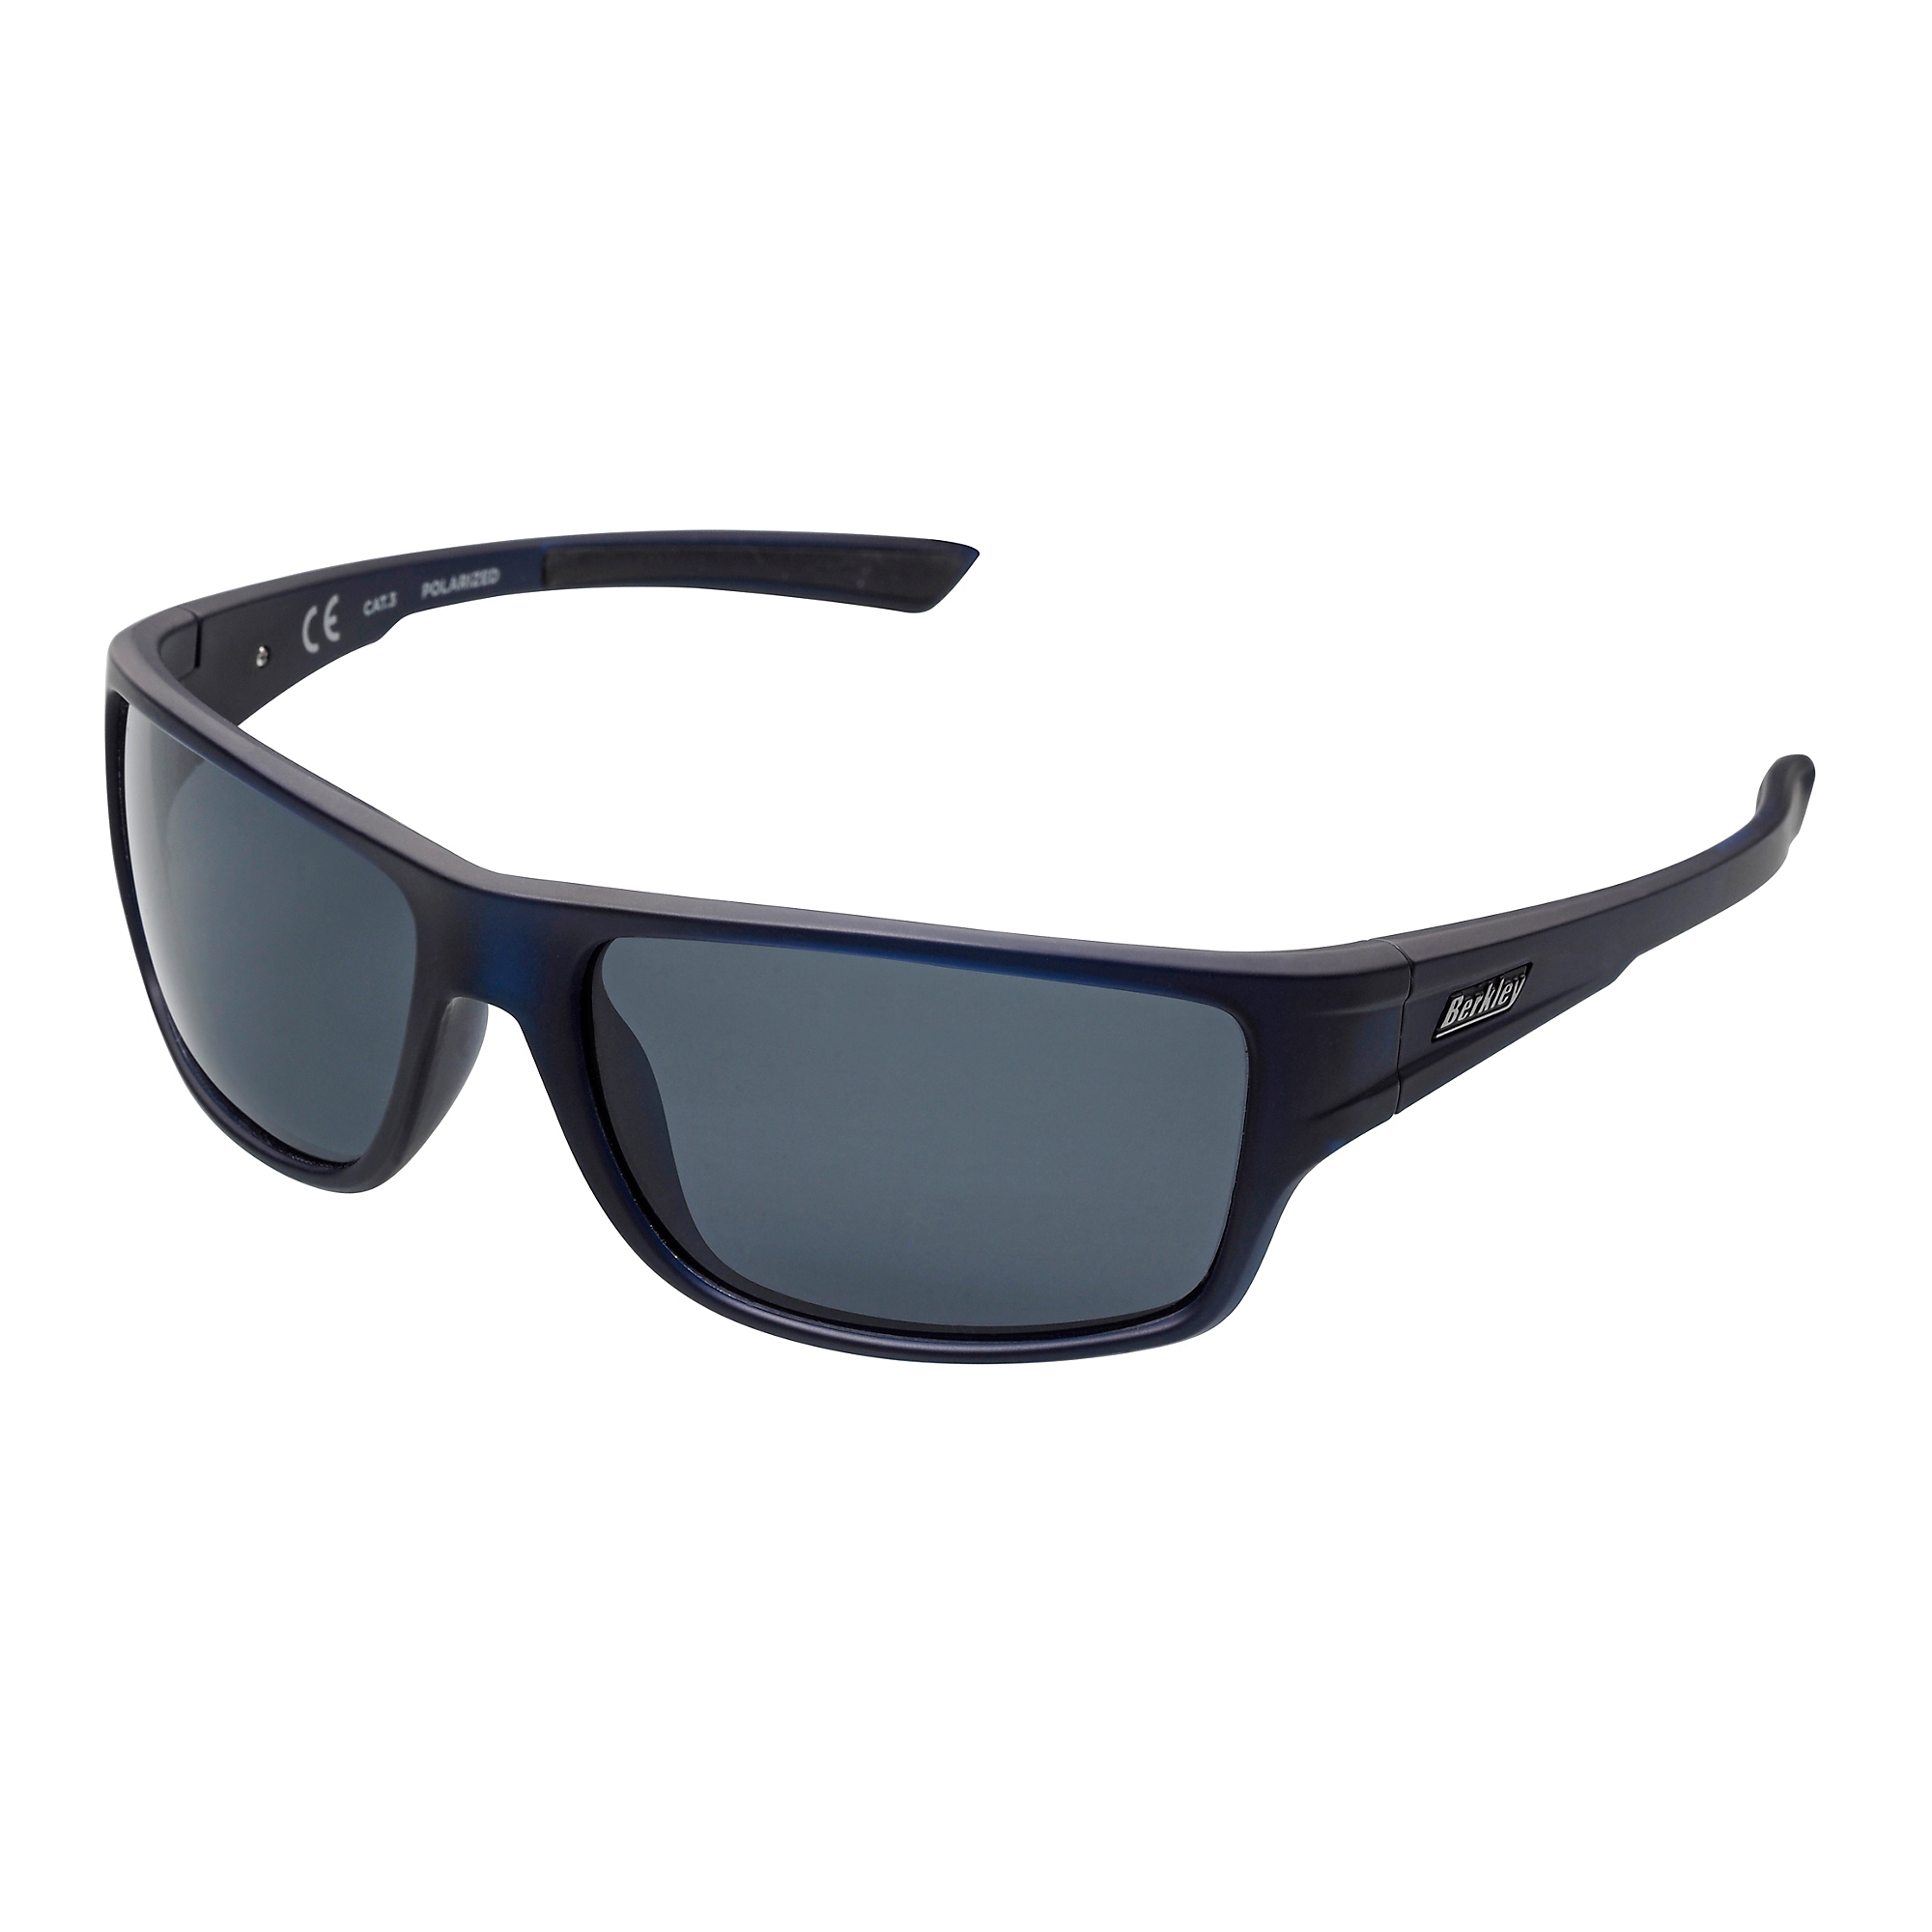 Berkley B11 Sunglasses - Black / Grey